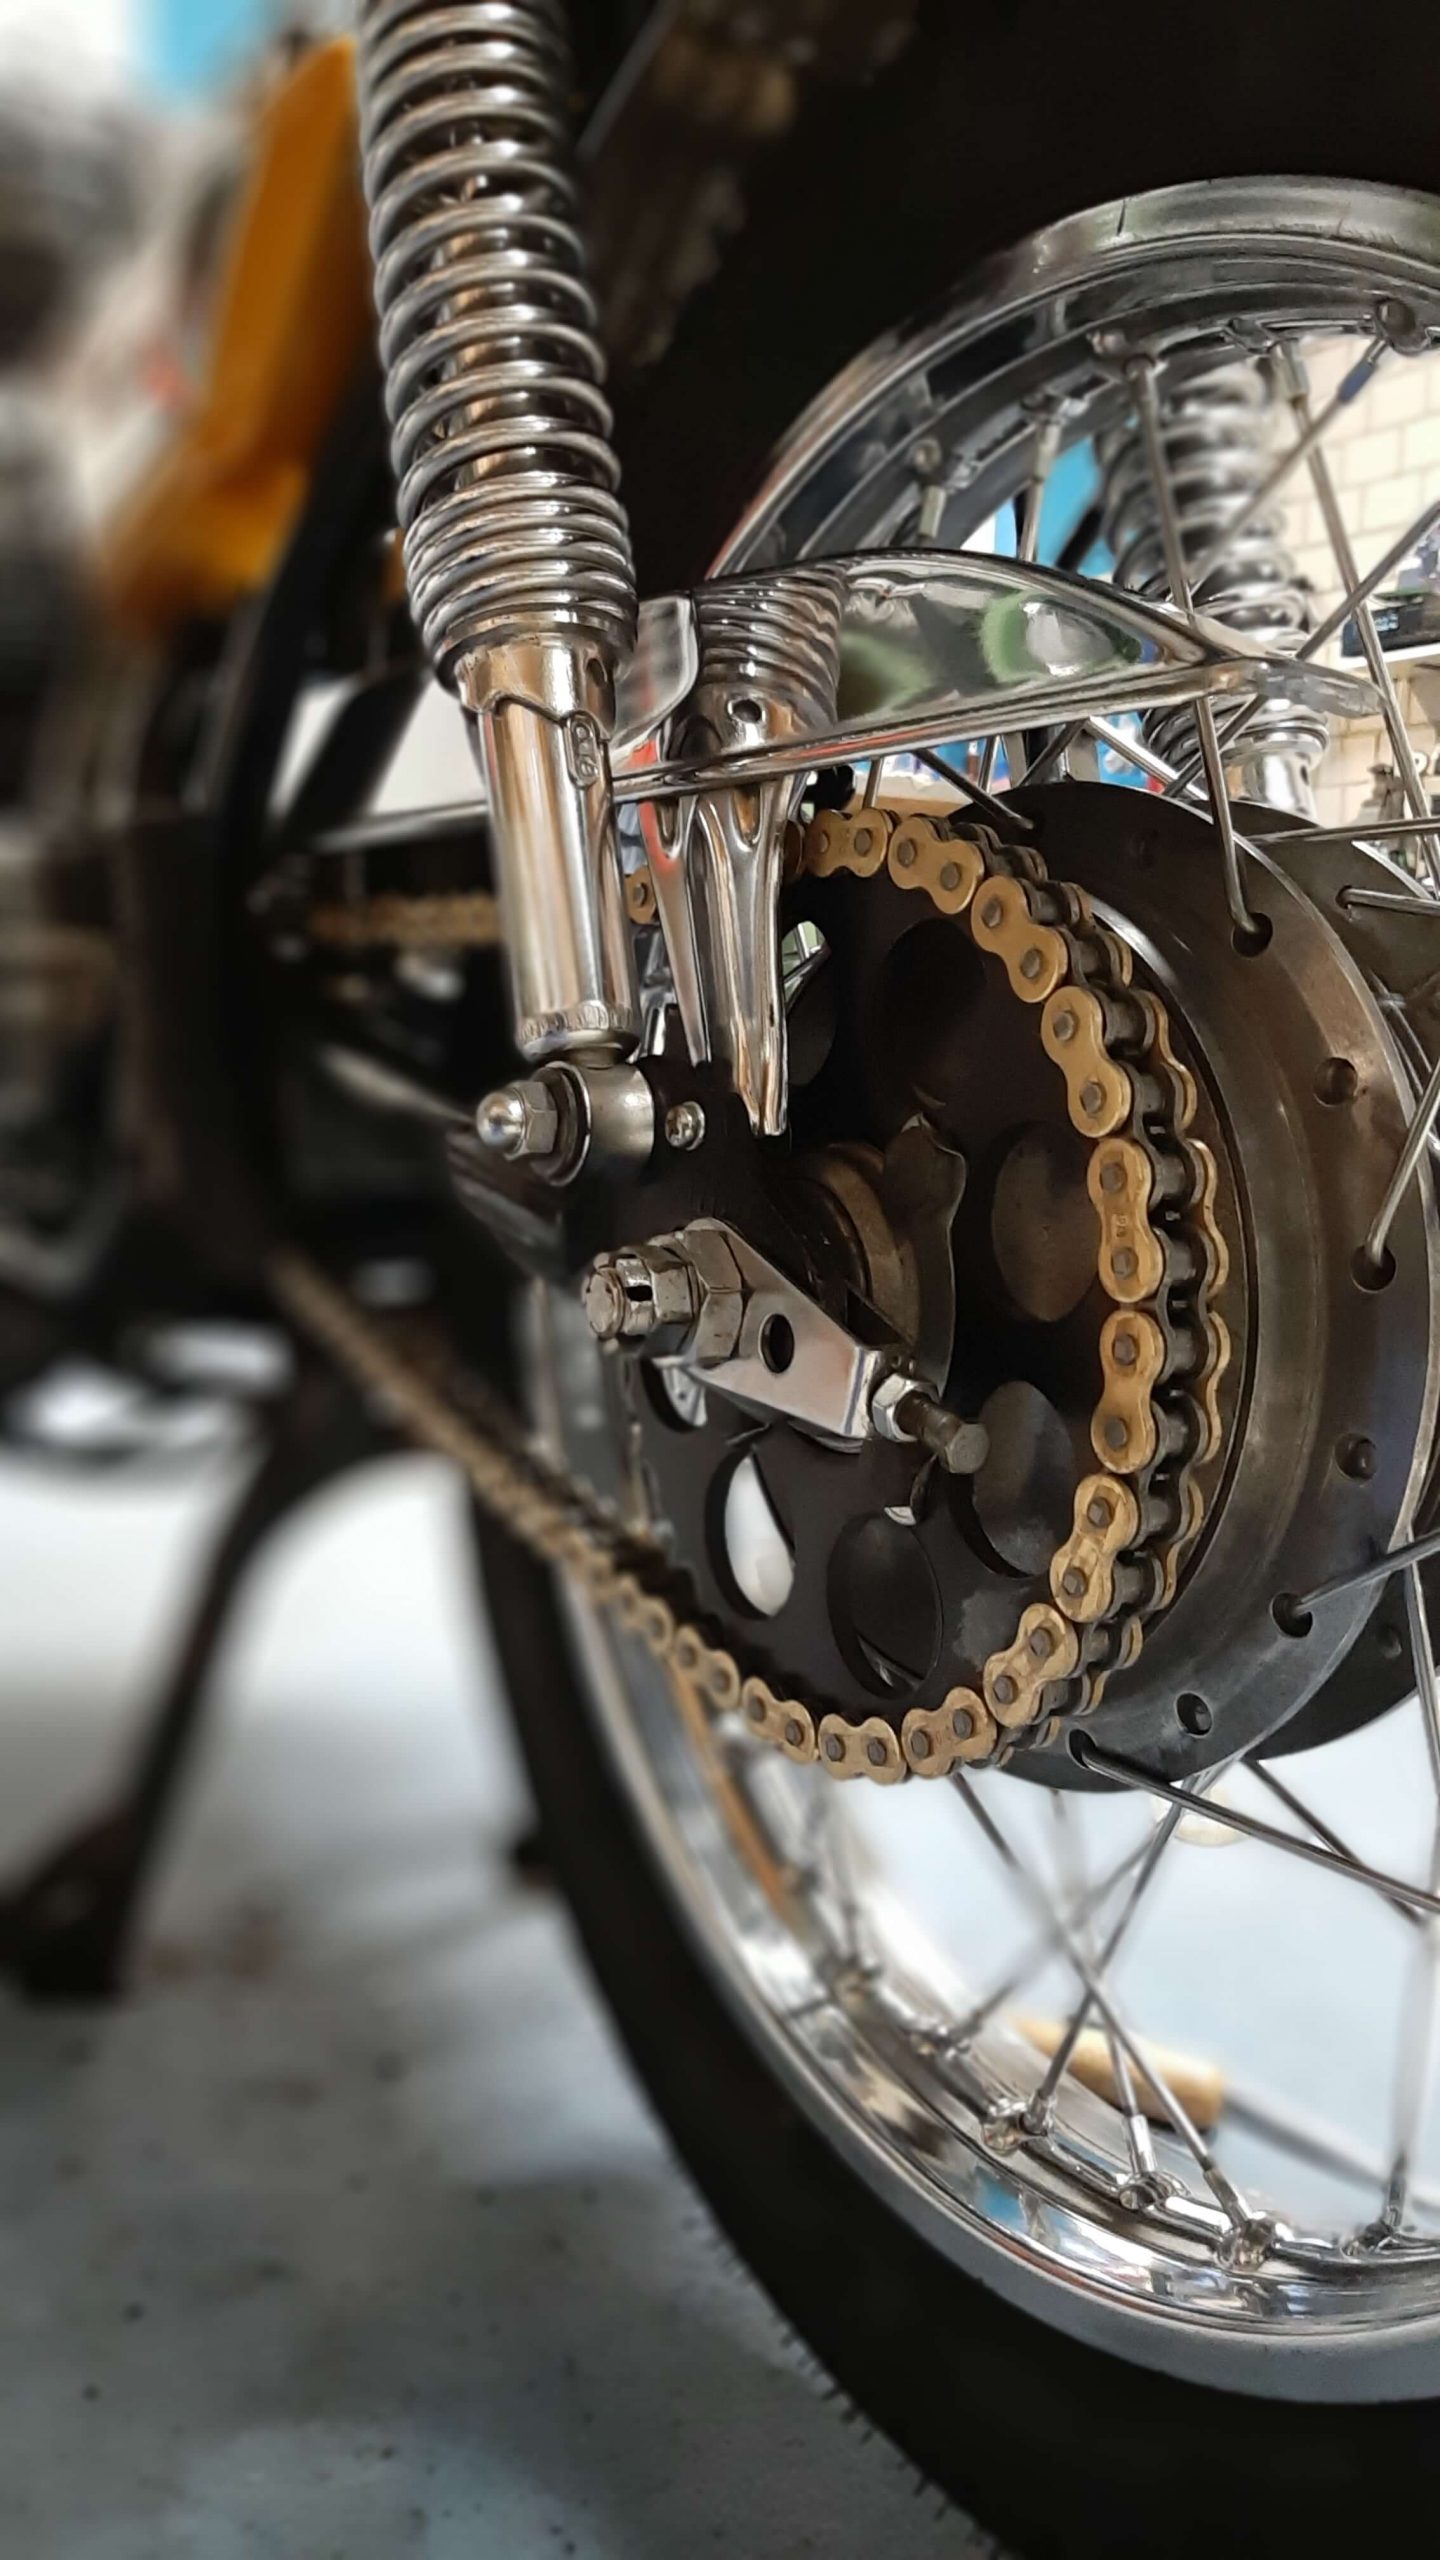 Thilos Bike Service - Motorrad Werkstatt Reparatur Service